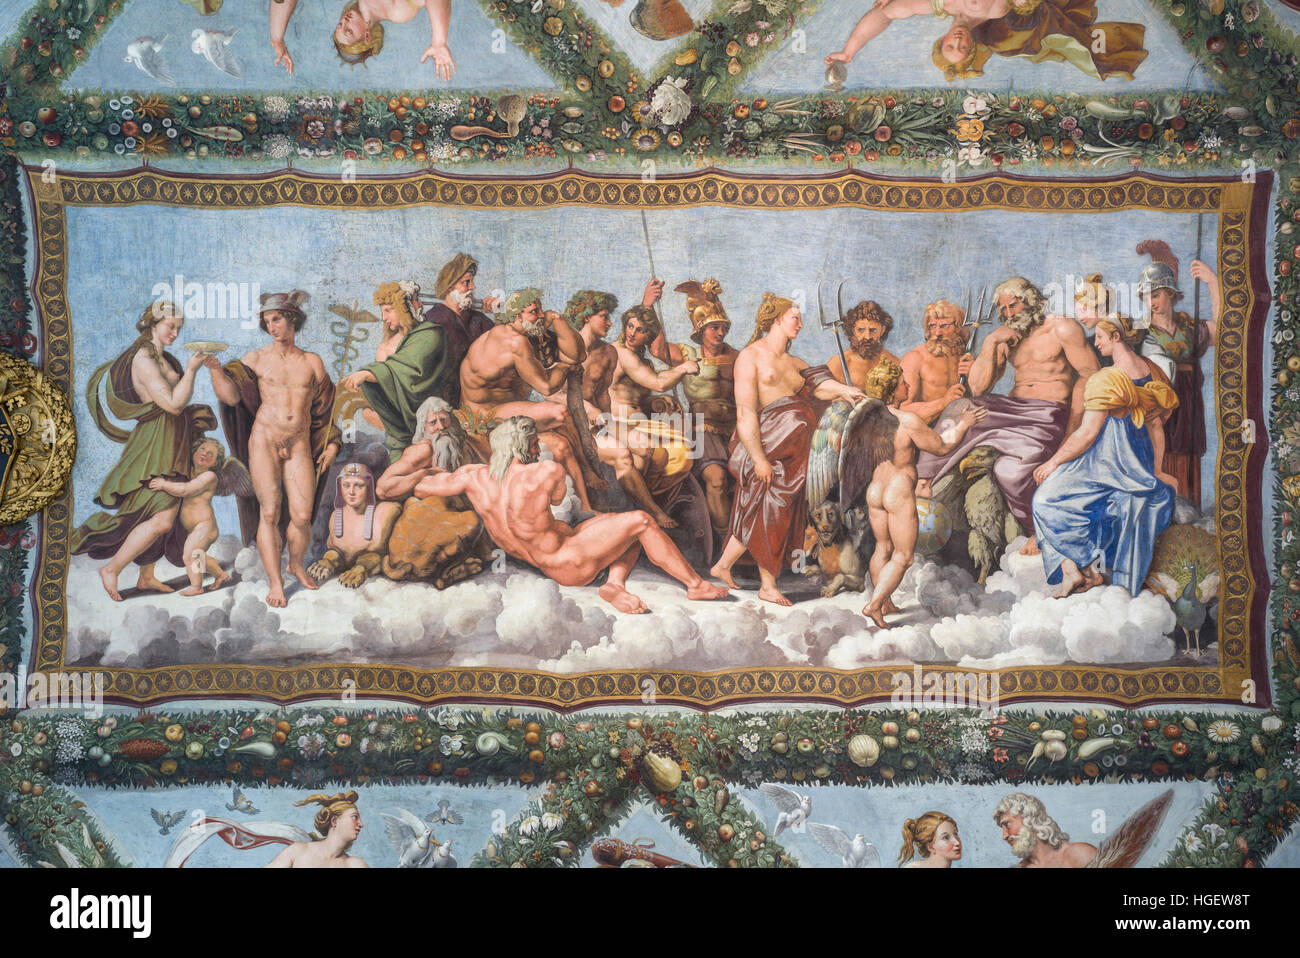 Rome. Italy. Villa Farnesina. The Council of Gods fresco by Raphael & his workshop, 1518. Stock Photo